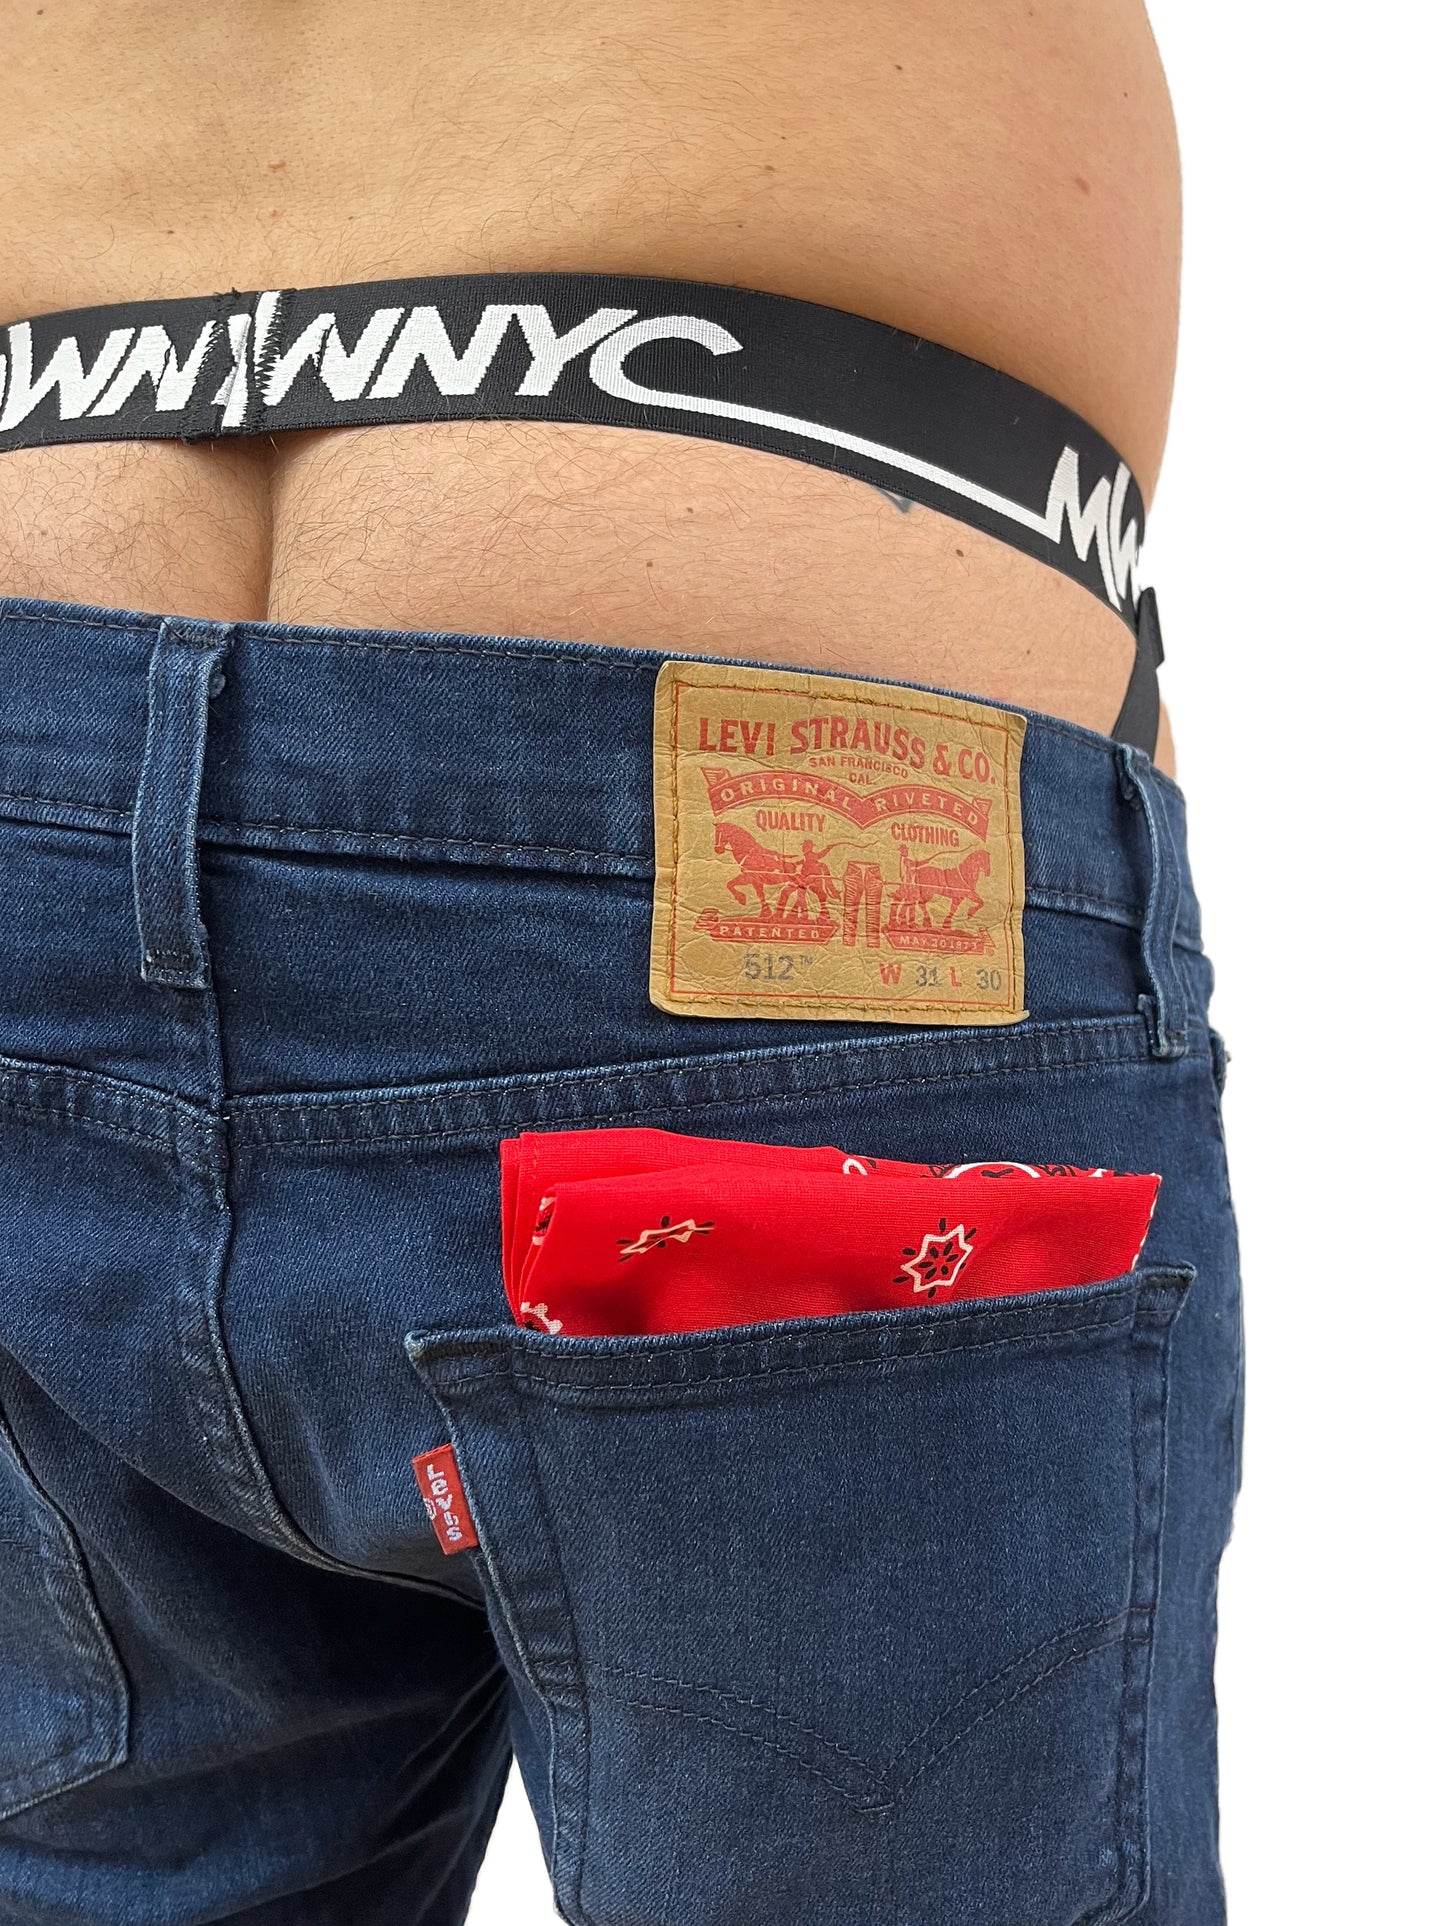 Red Hanky Jeans.jpg